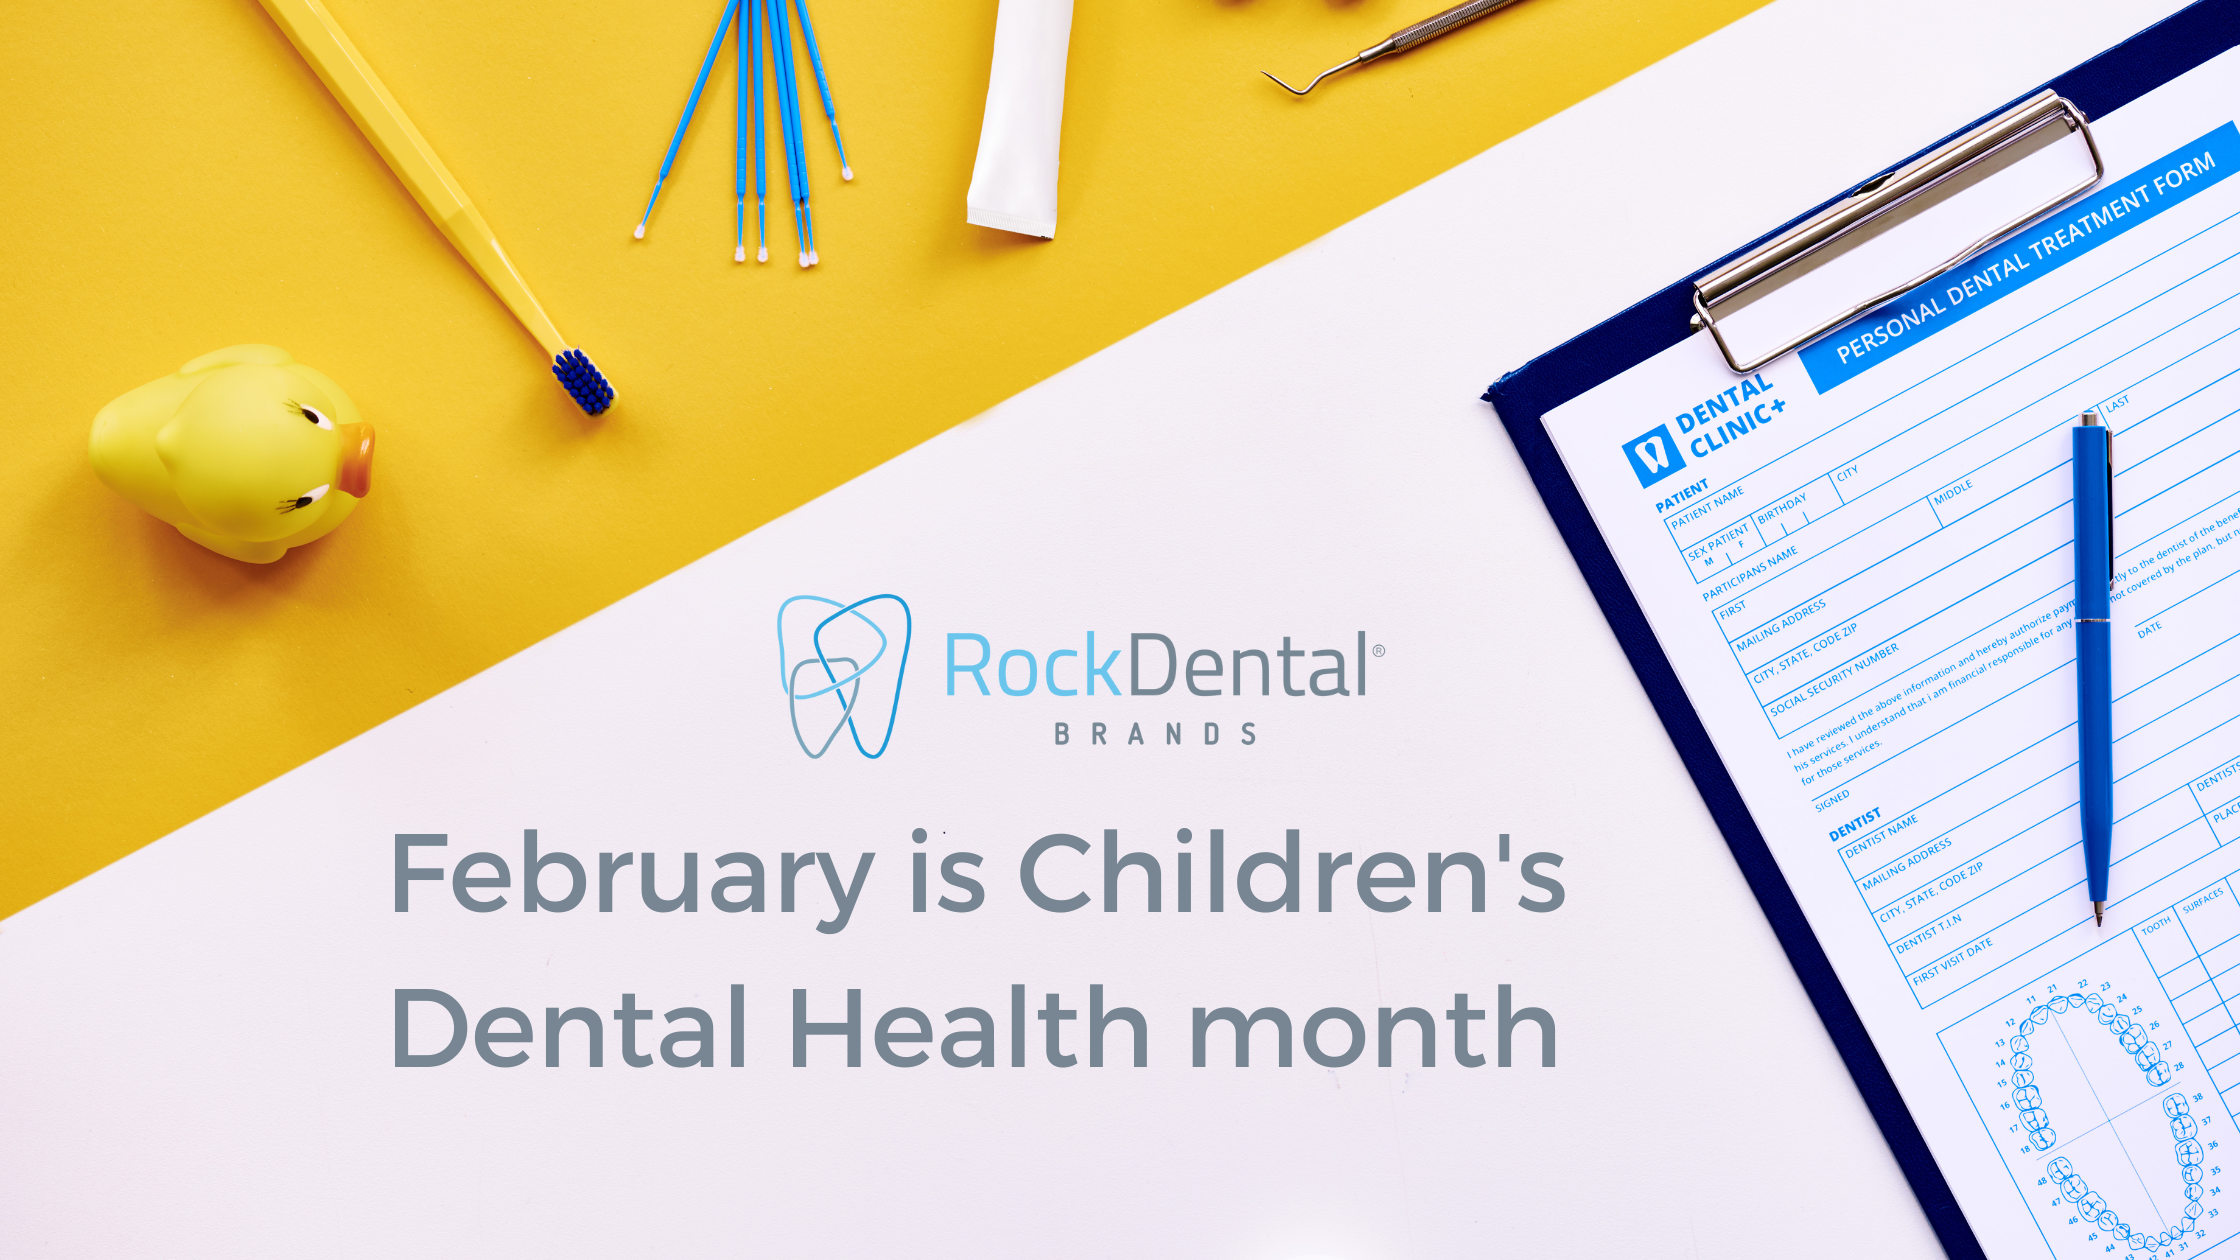 February is Children’s Dental Health month